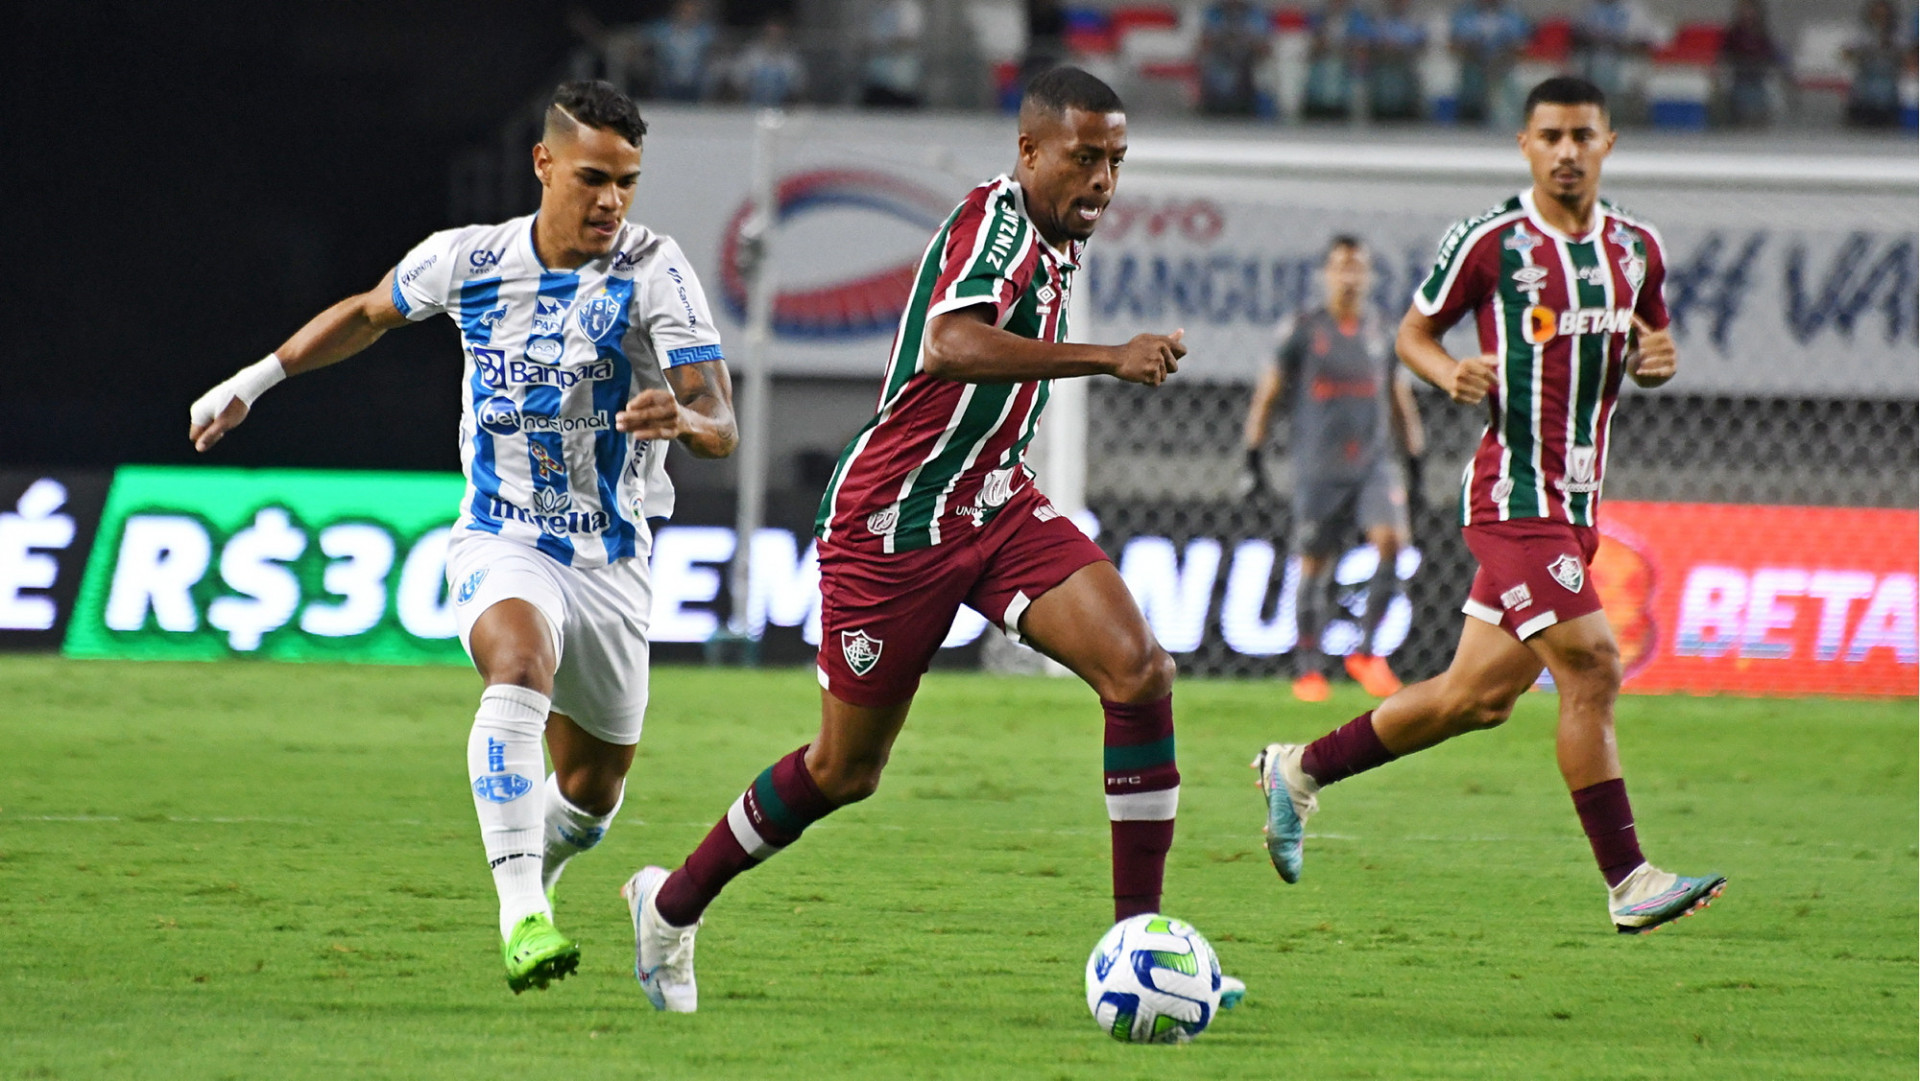 keno conduz a bola durante o jogo entre Paysandu e Fluminense   - MAILSON SANTANA/ FLUMINENSE FC   